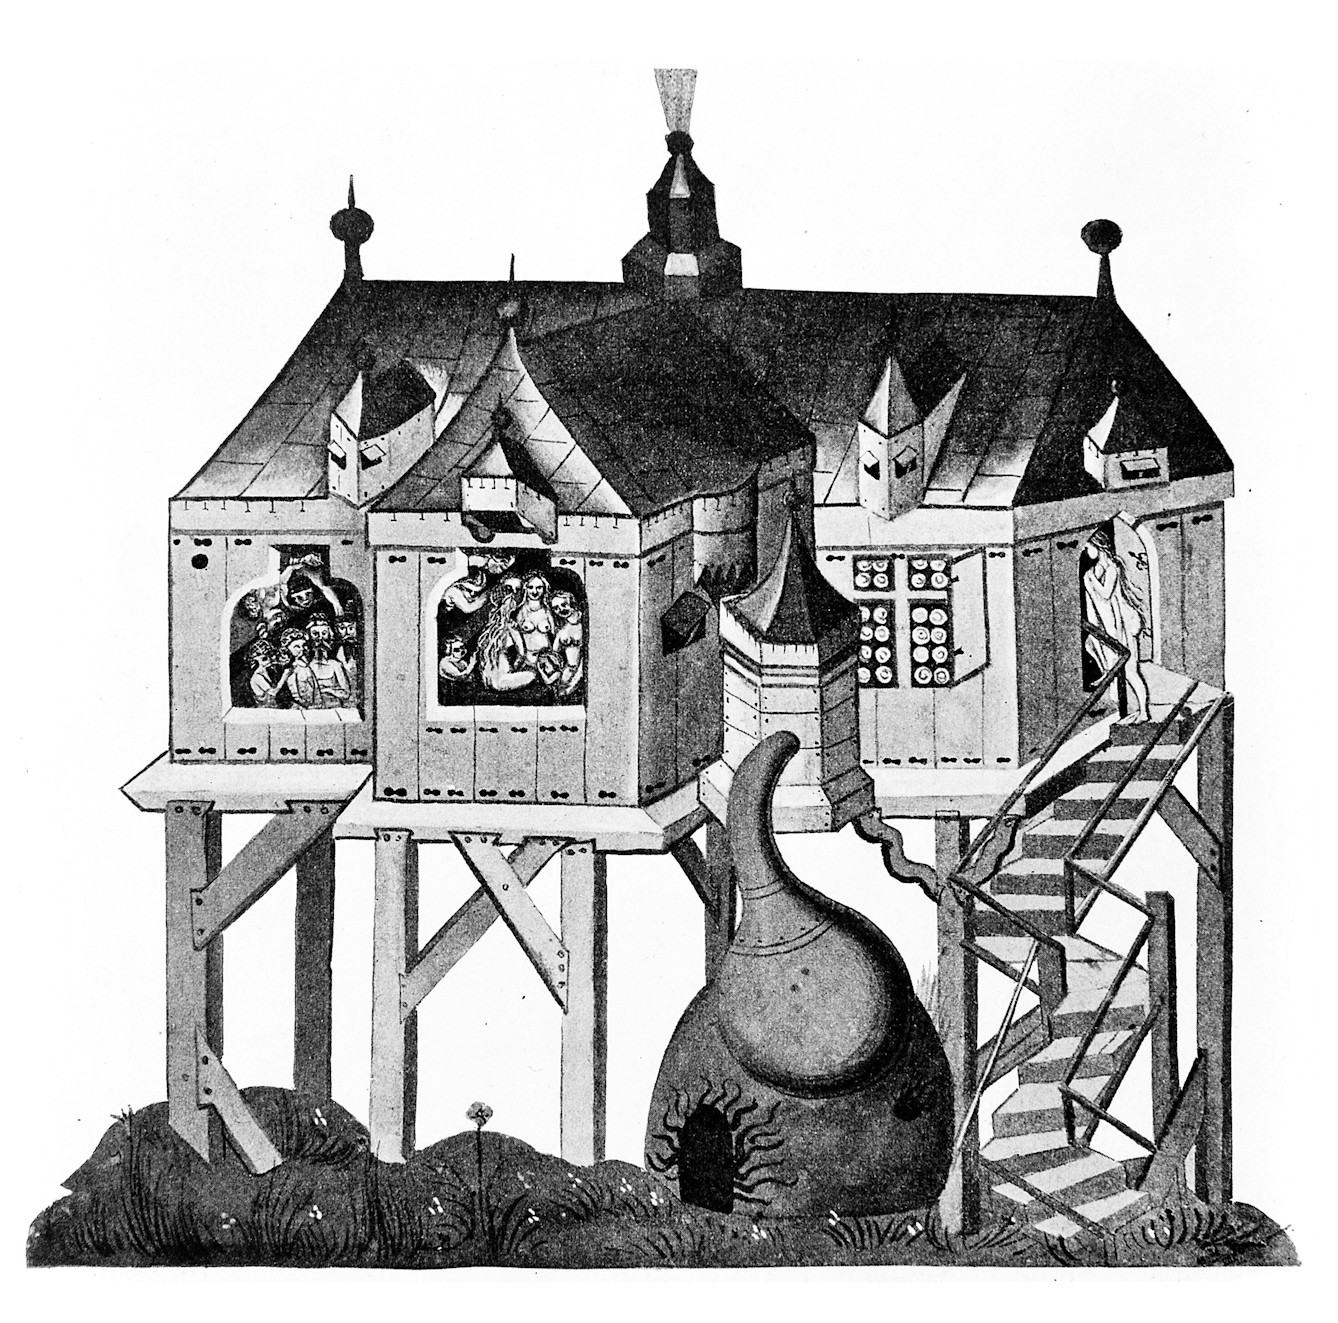 A 15th century Bathhouse